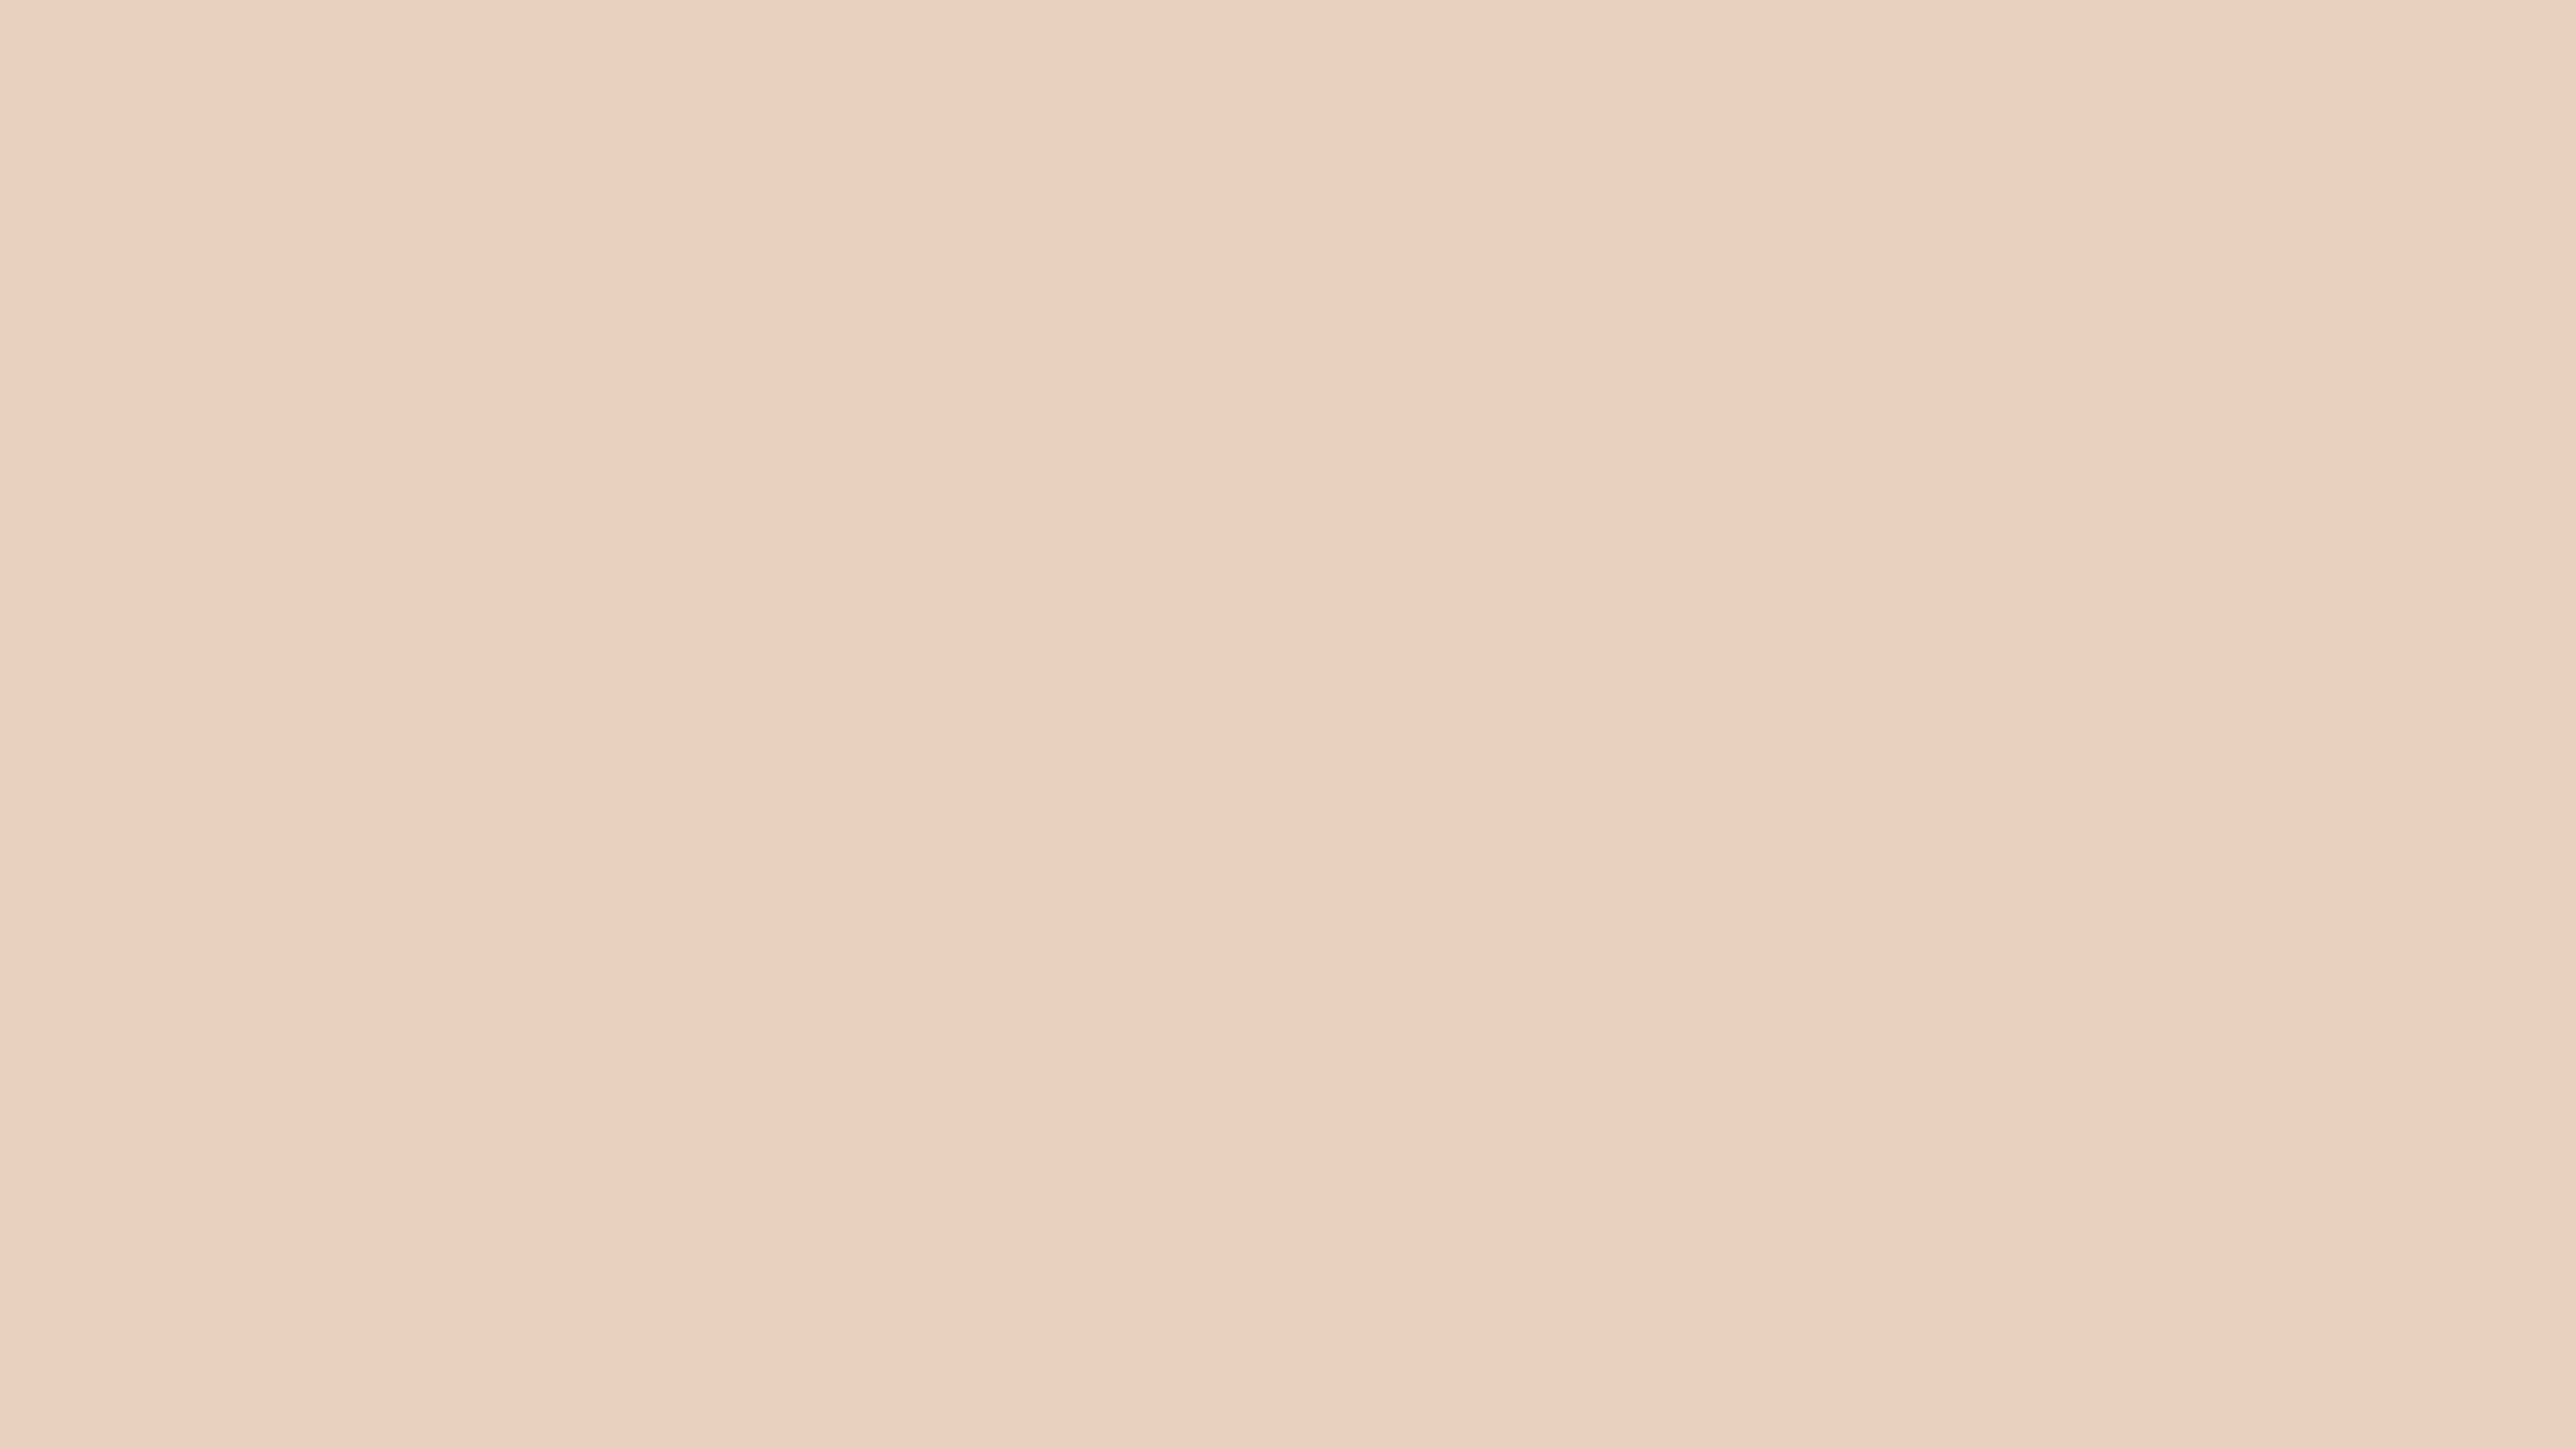 Pastel Rose Tan Solid Color Background Image Free Image Generator